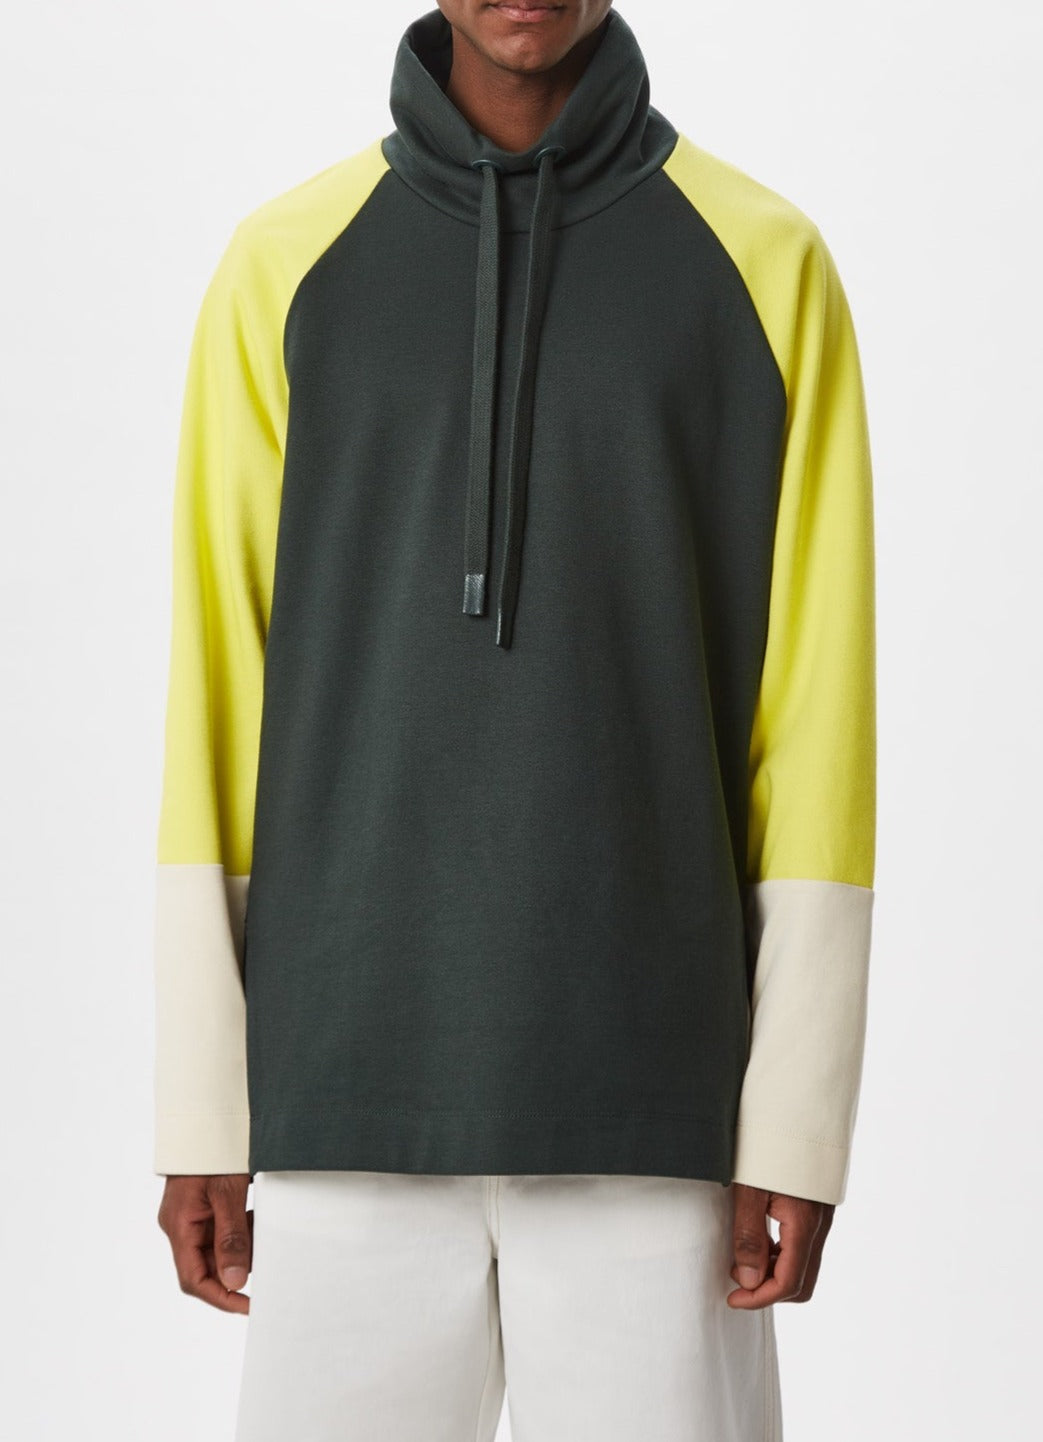 Men Jumper | Bottle Green Chimney Collar Multicolour Sweatshirt by Spanish designer Adolfo Dominguez